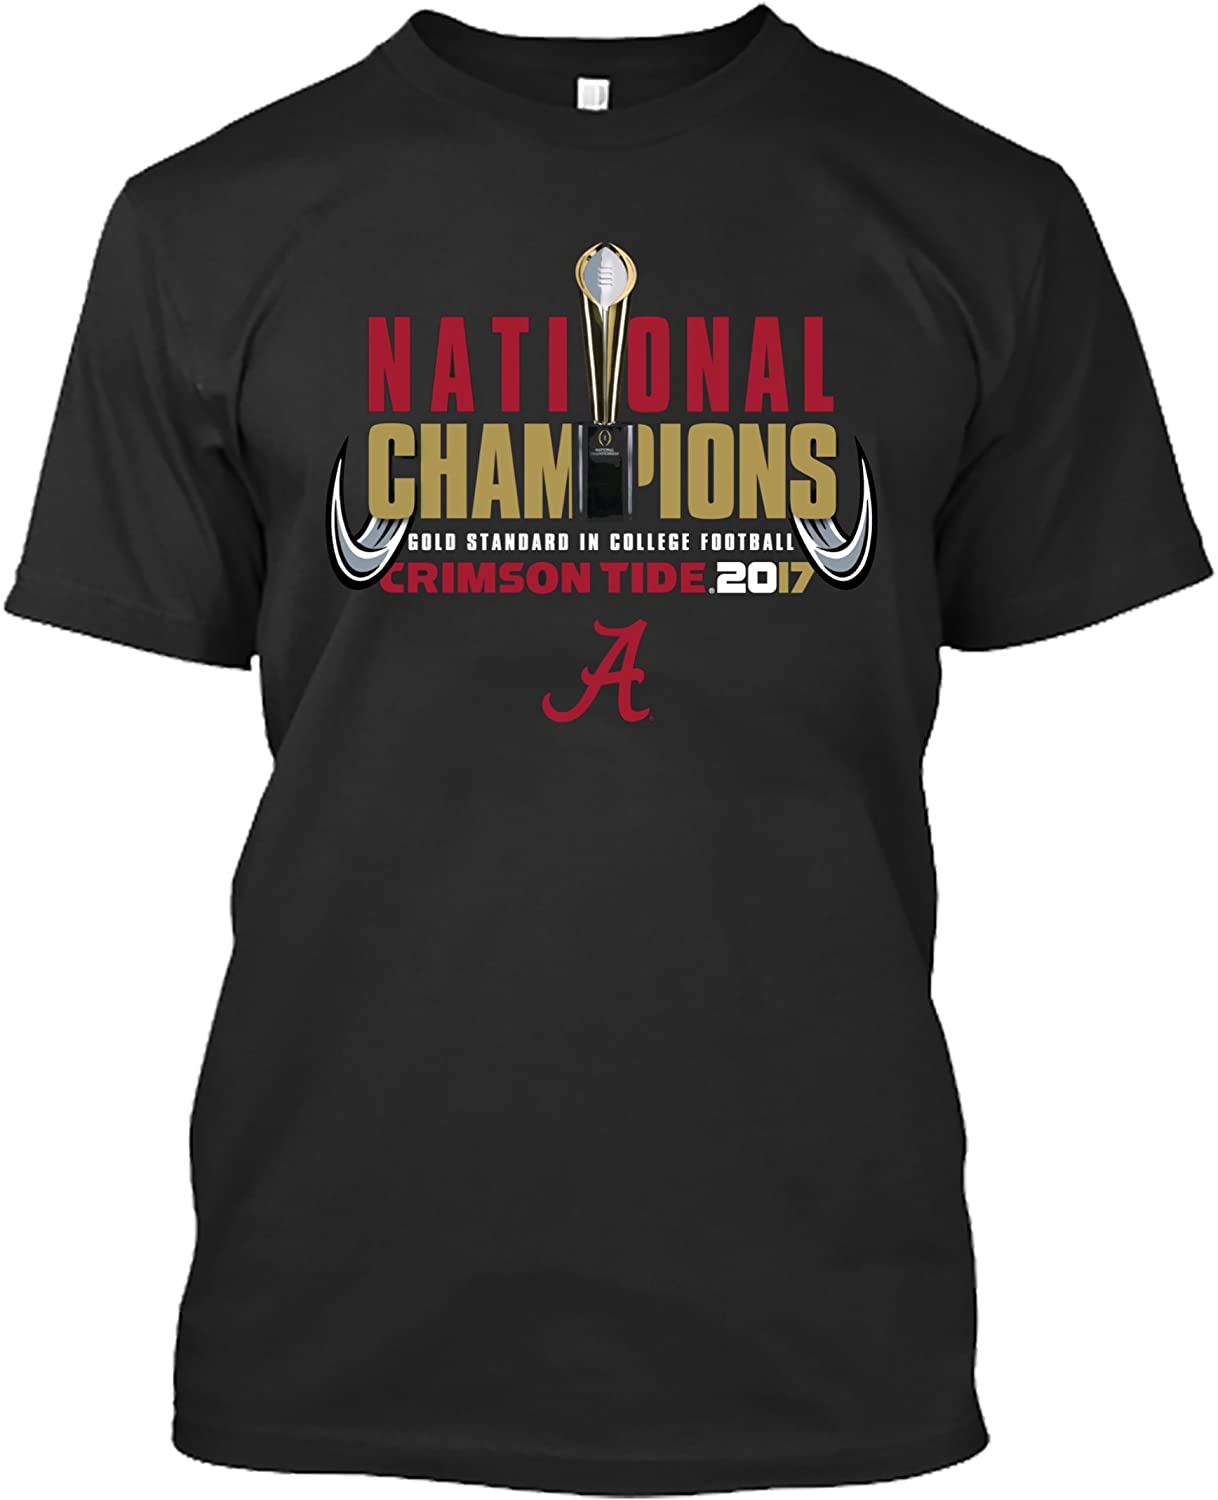 Alabama Crimson Tide T-Shirt - New World Graphics - National Champions 2017 - Football - Trophy - Black